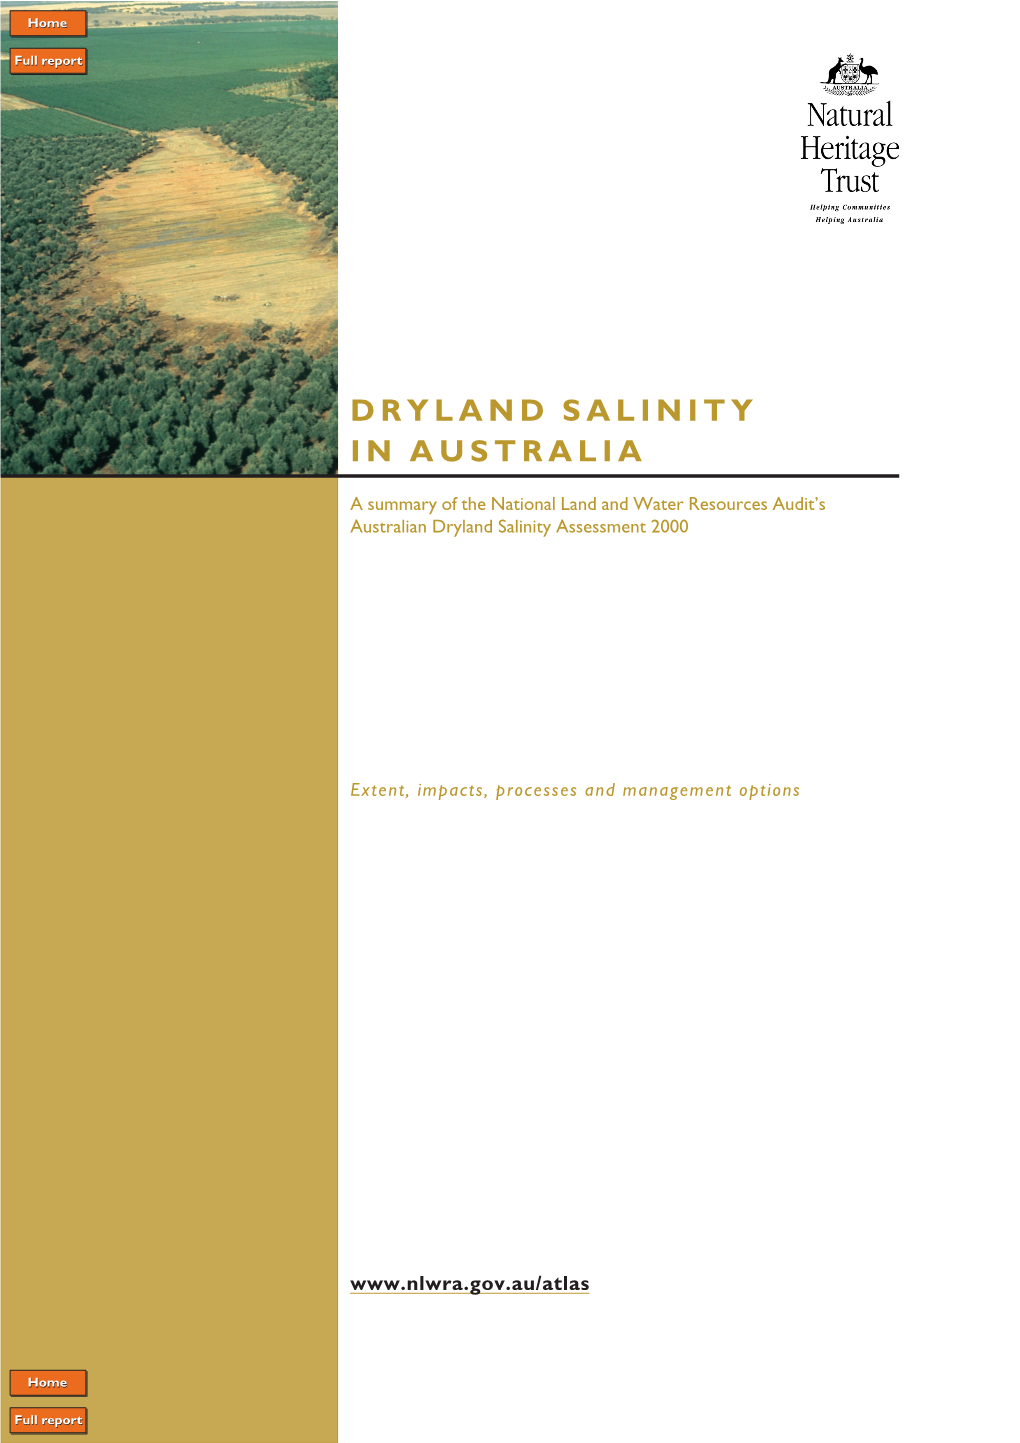 DRYLAND SALINITY in AUSTRALIA—Summary